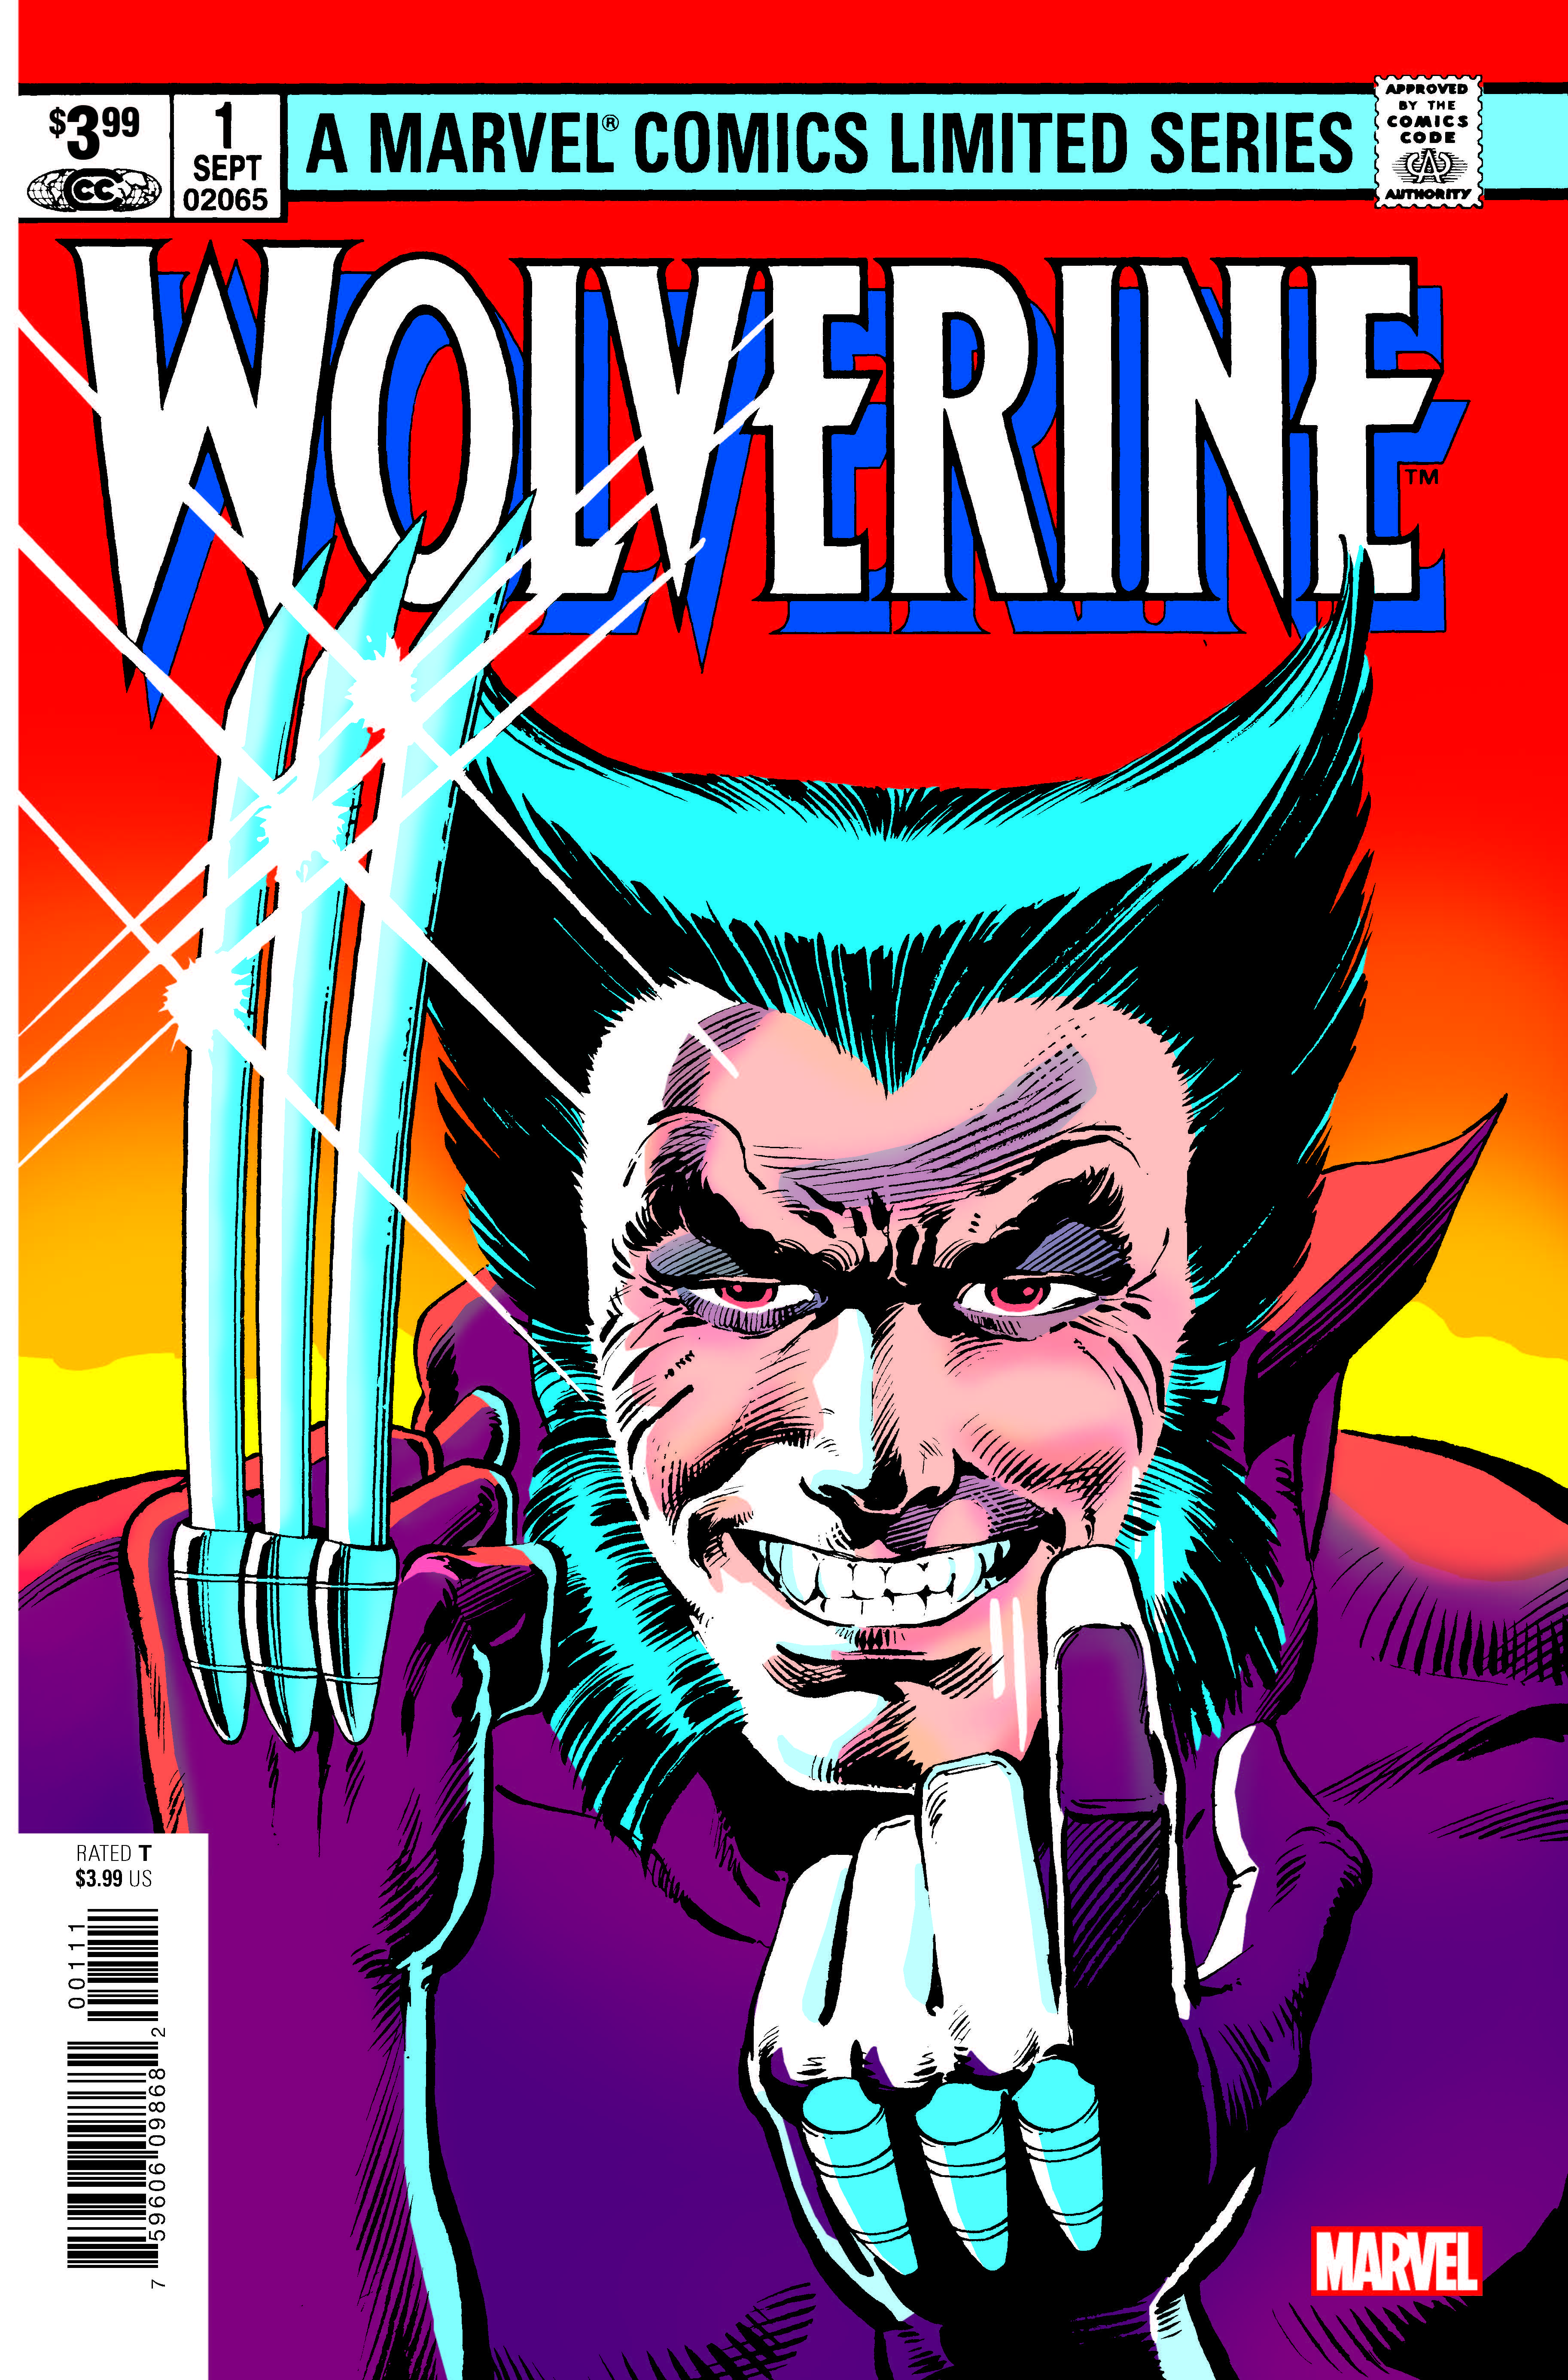 Wolverine Claremont & Miller #1 Facsimile Edition